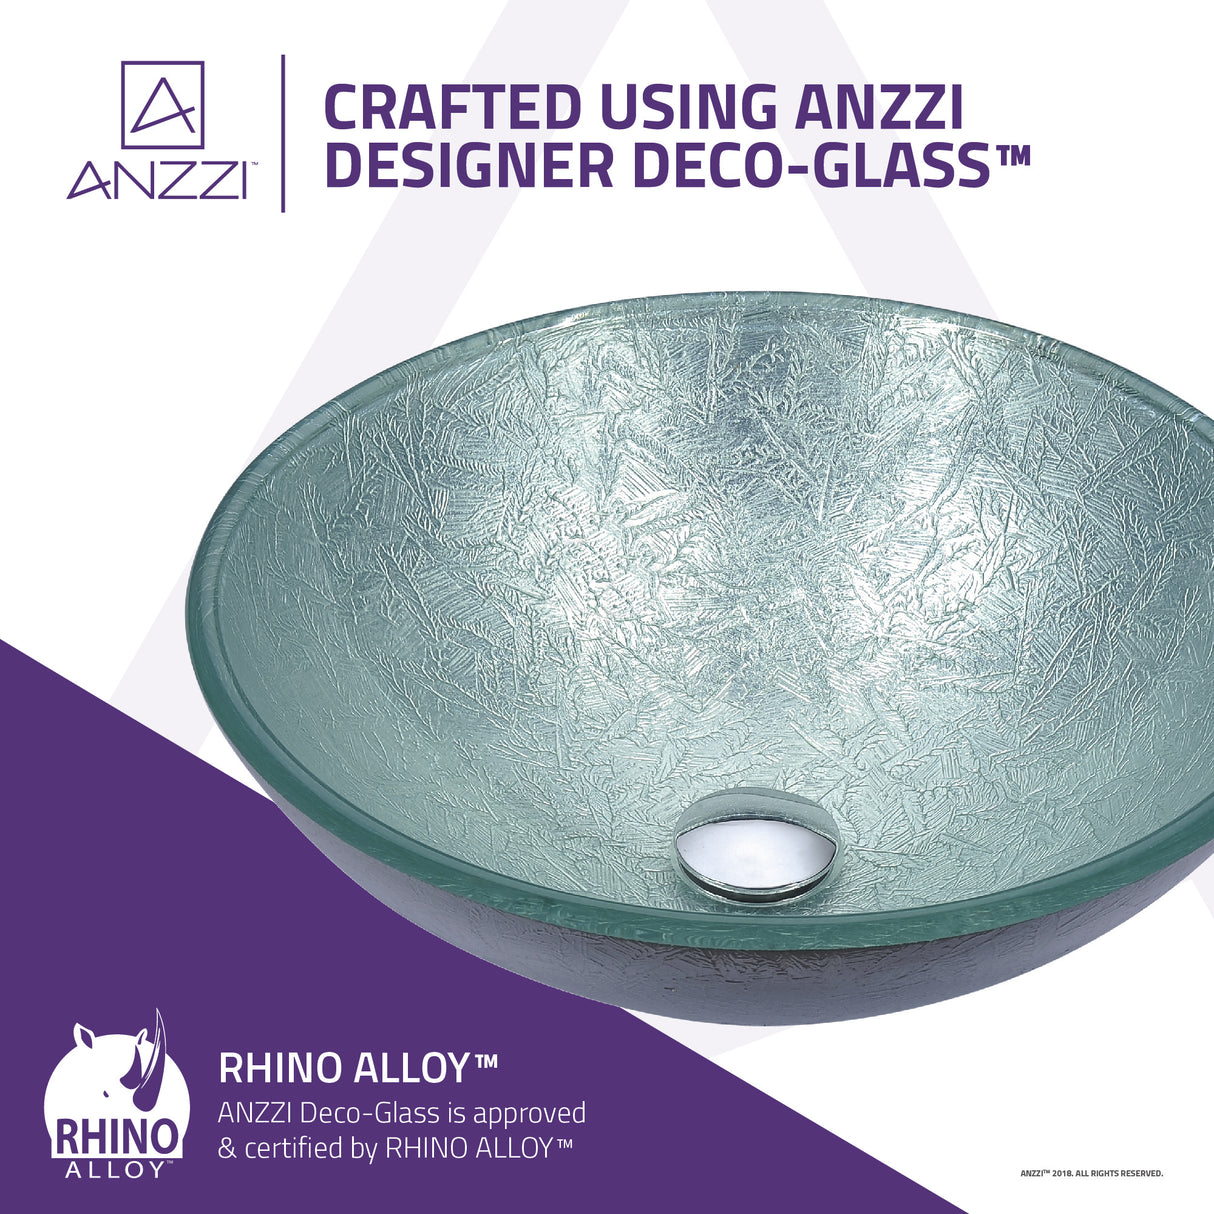 ANZZI LS-AZ296 Posh Series Deco-Glass Vessel Sink in Glacial Silver